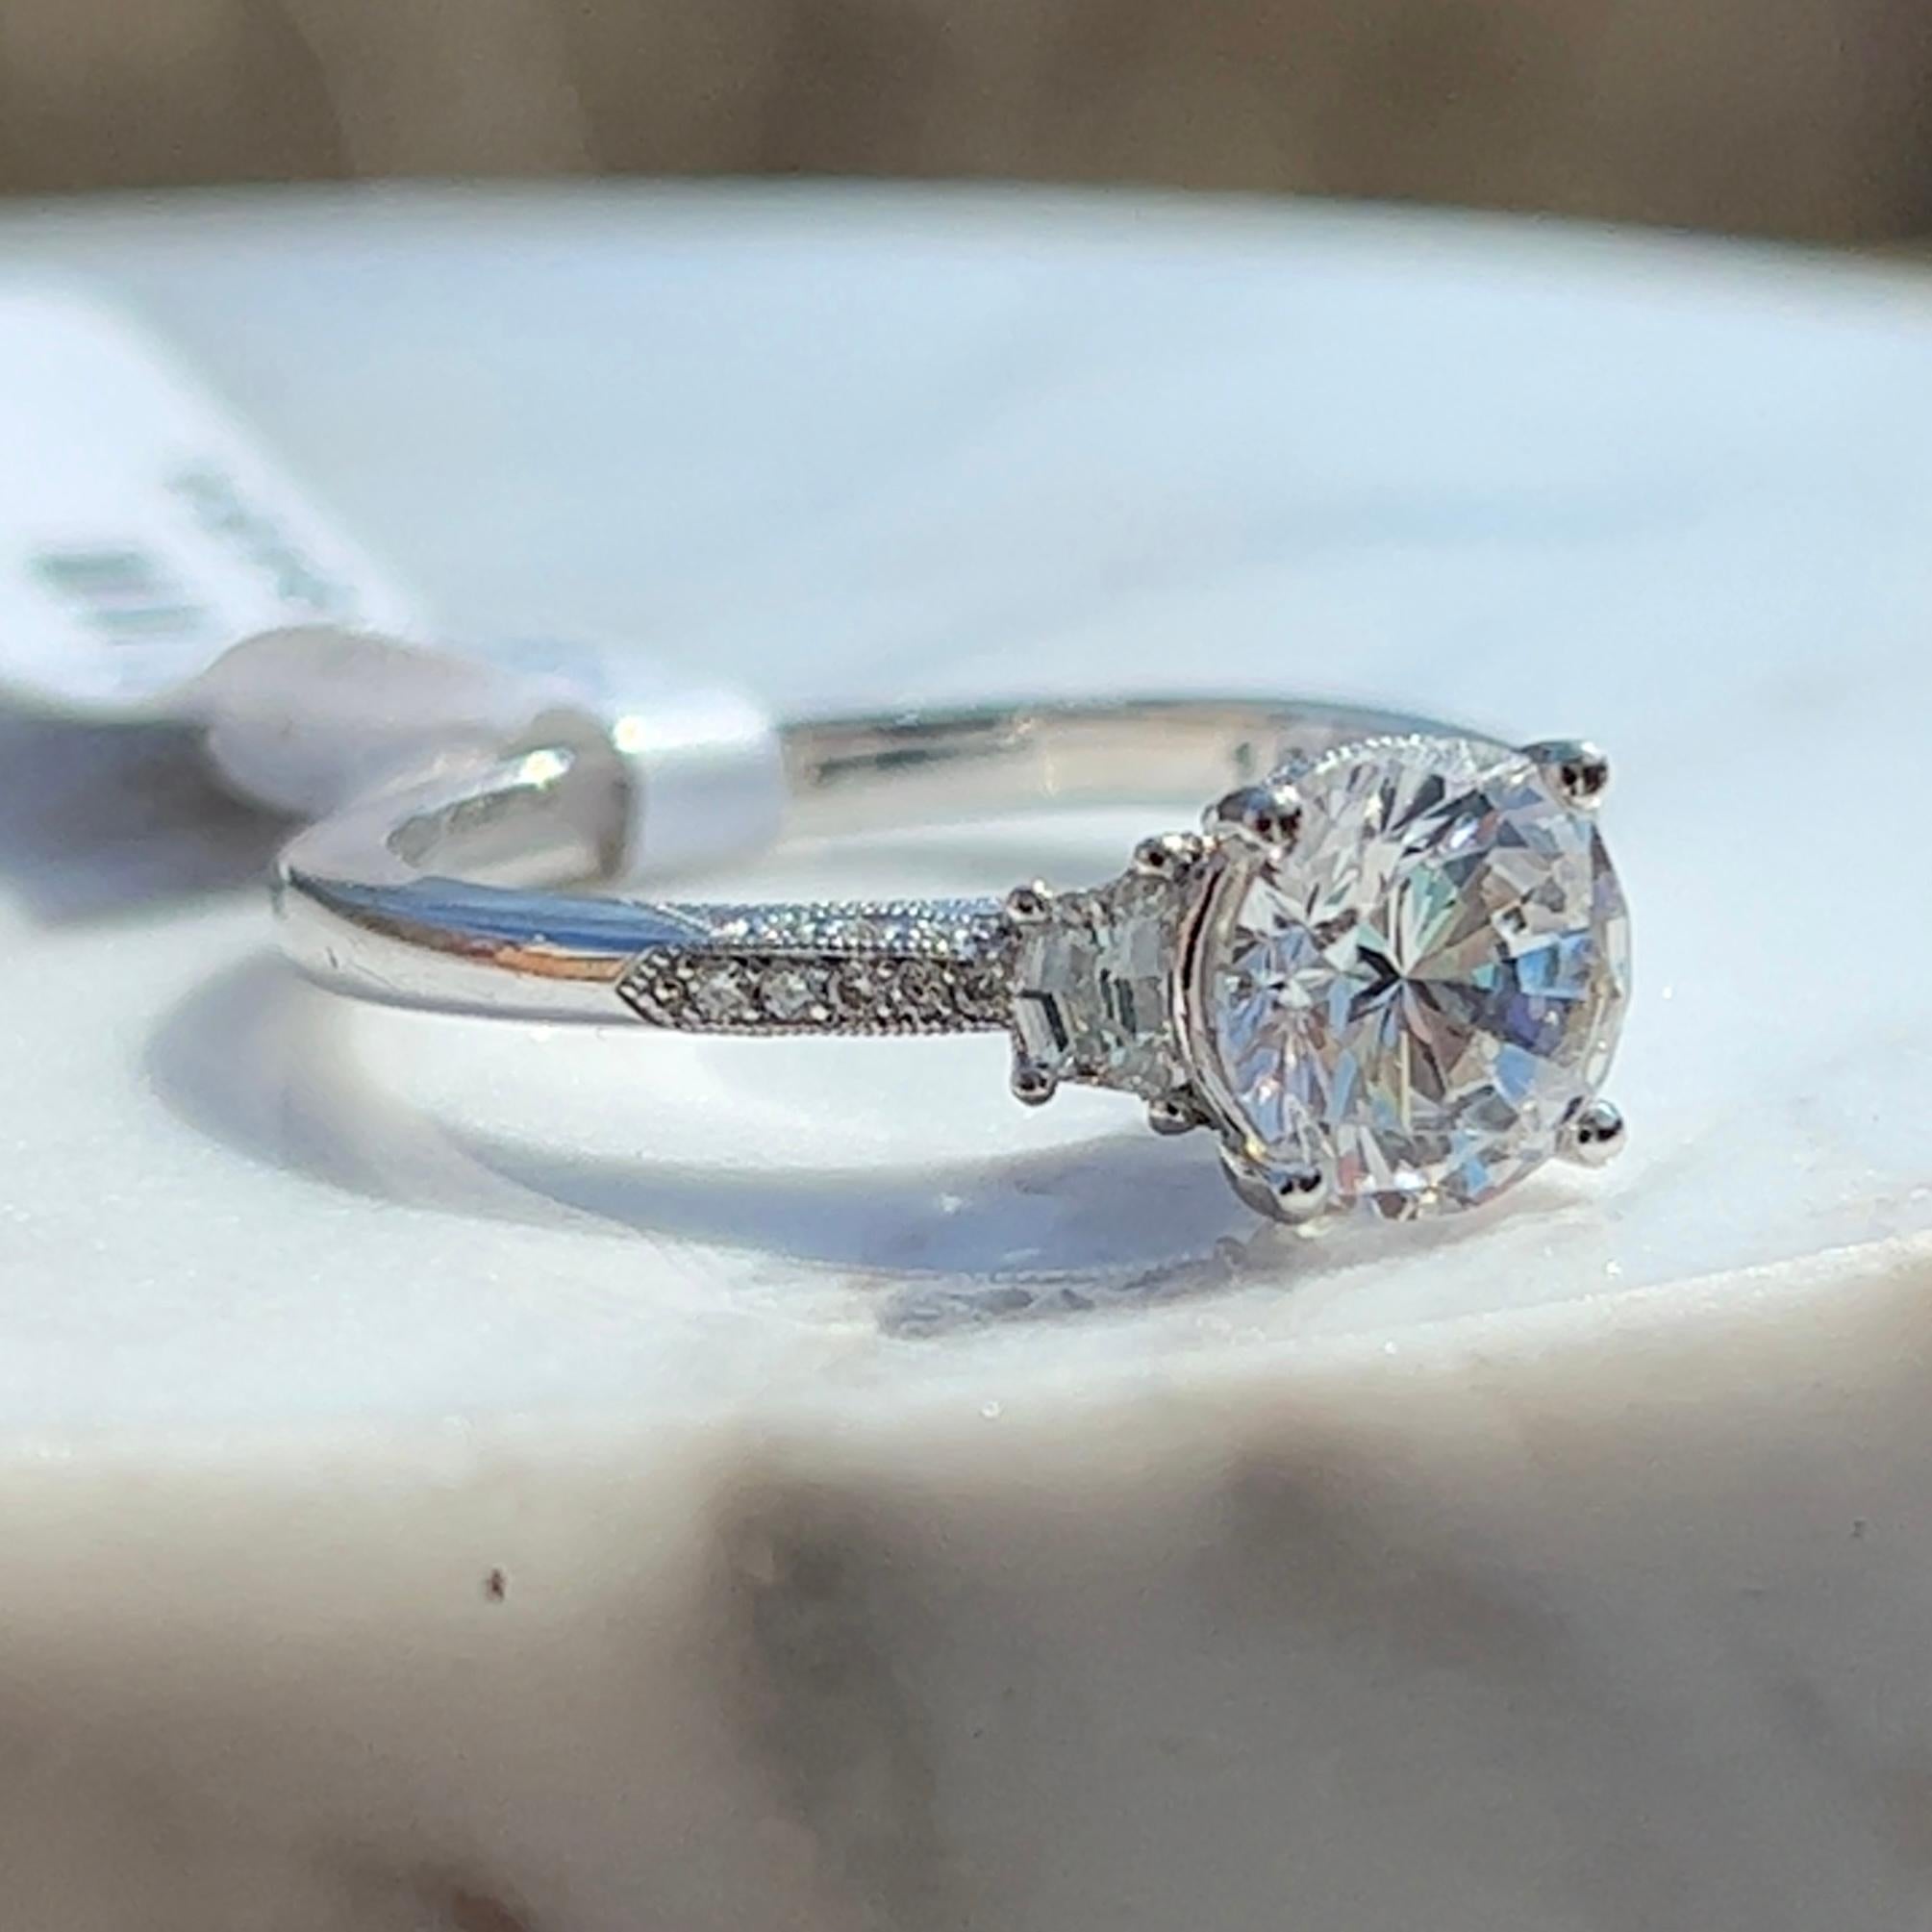 Brilliant Cut Tacori Diamond Engagement Ring Mounting in 18k White Gold